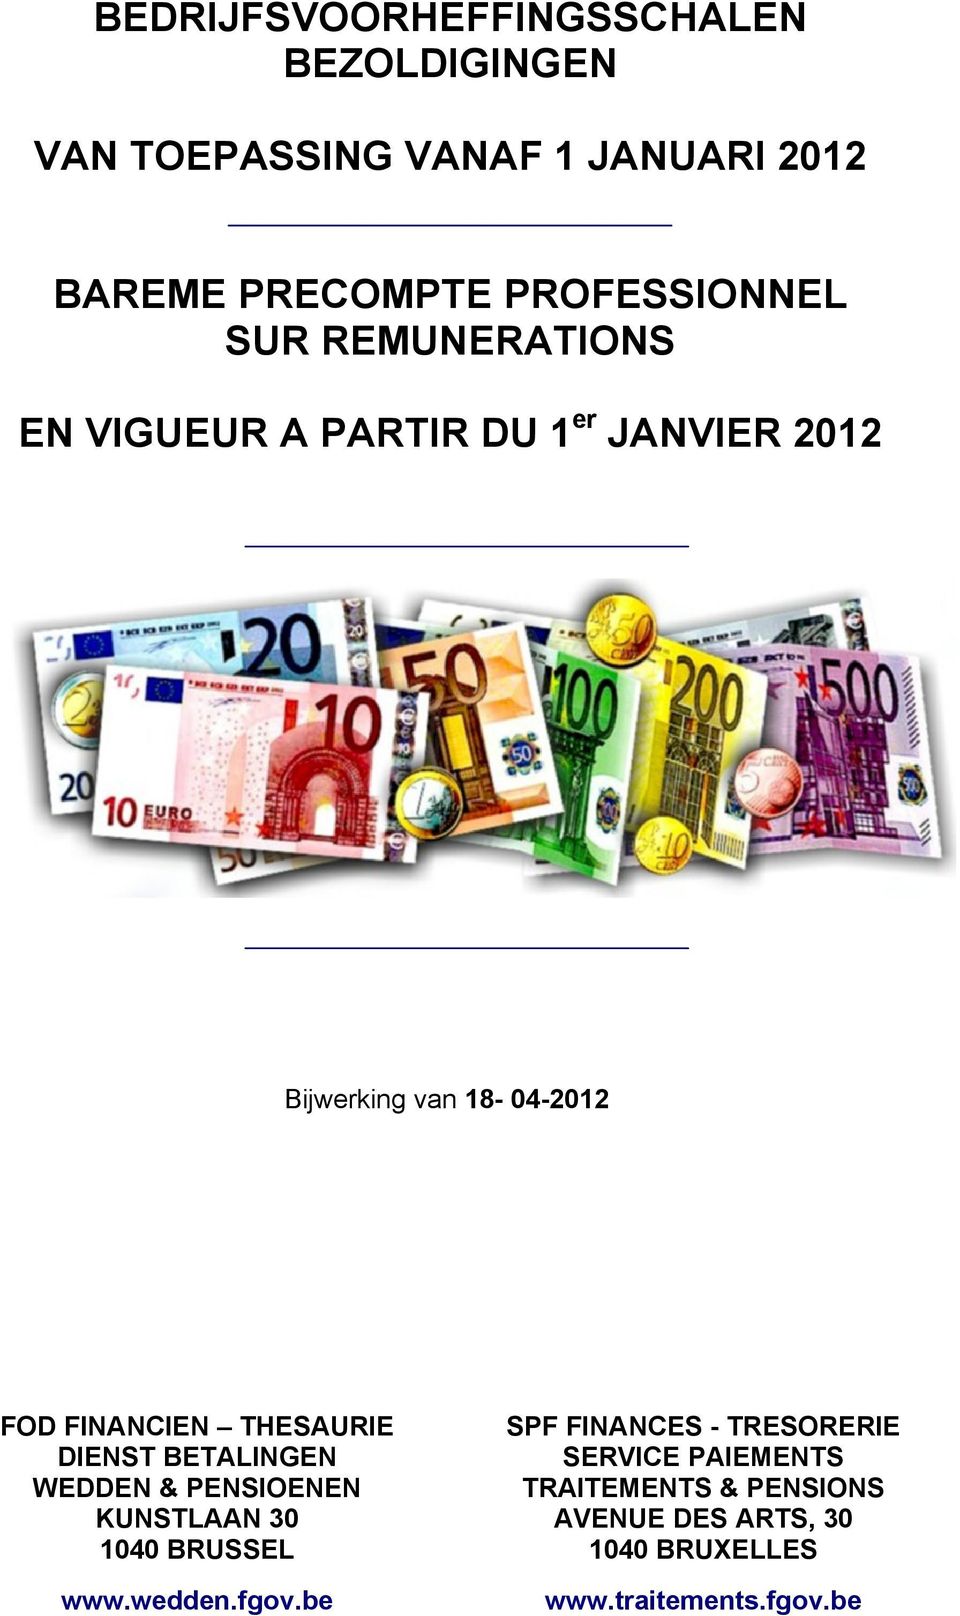 FINANCIEN THESAURIE DIENST BETALINGEN WEDDEN & PENSIOENEN KUNSTLAAN 30 1040 BRUSSEL www.wedden.fgov.